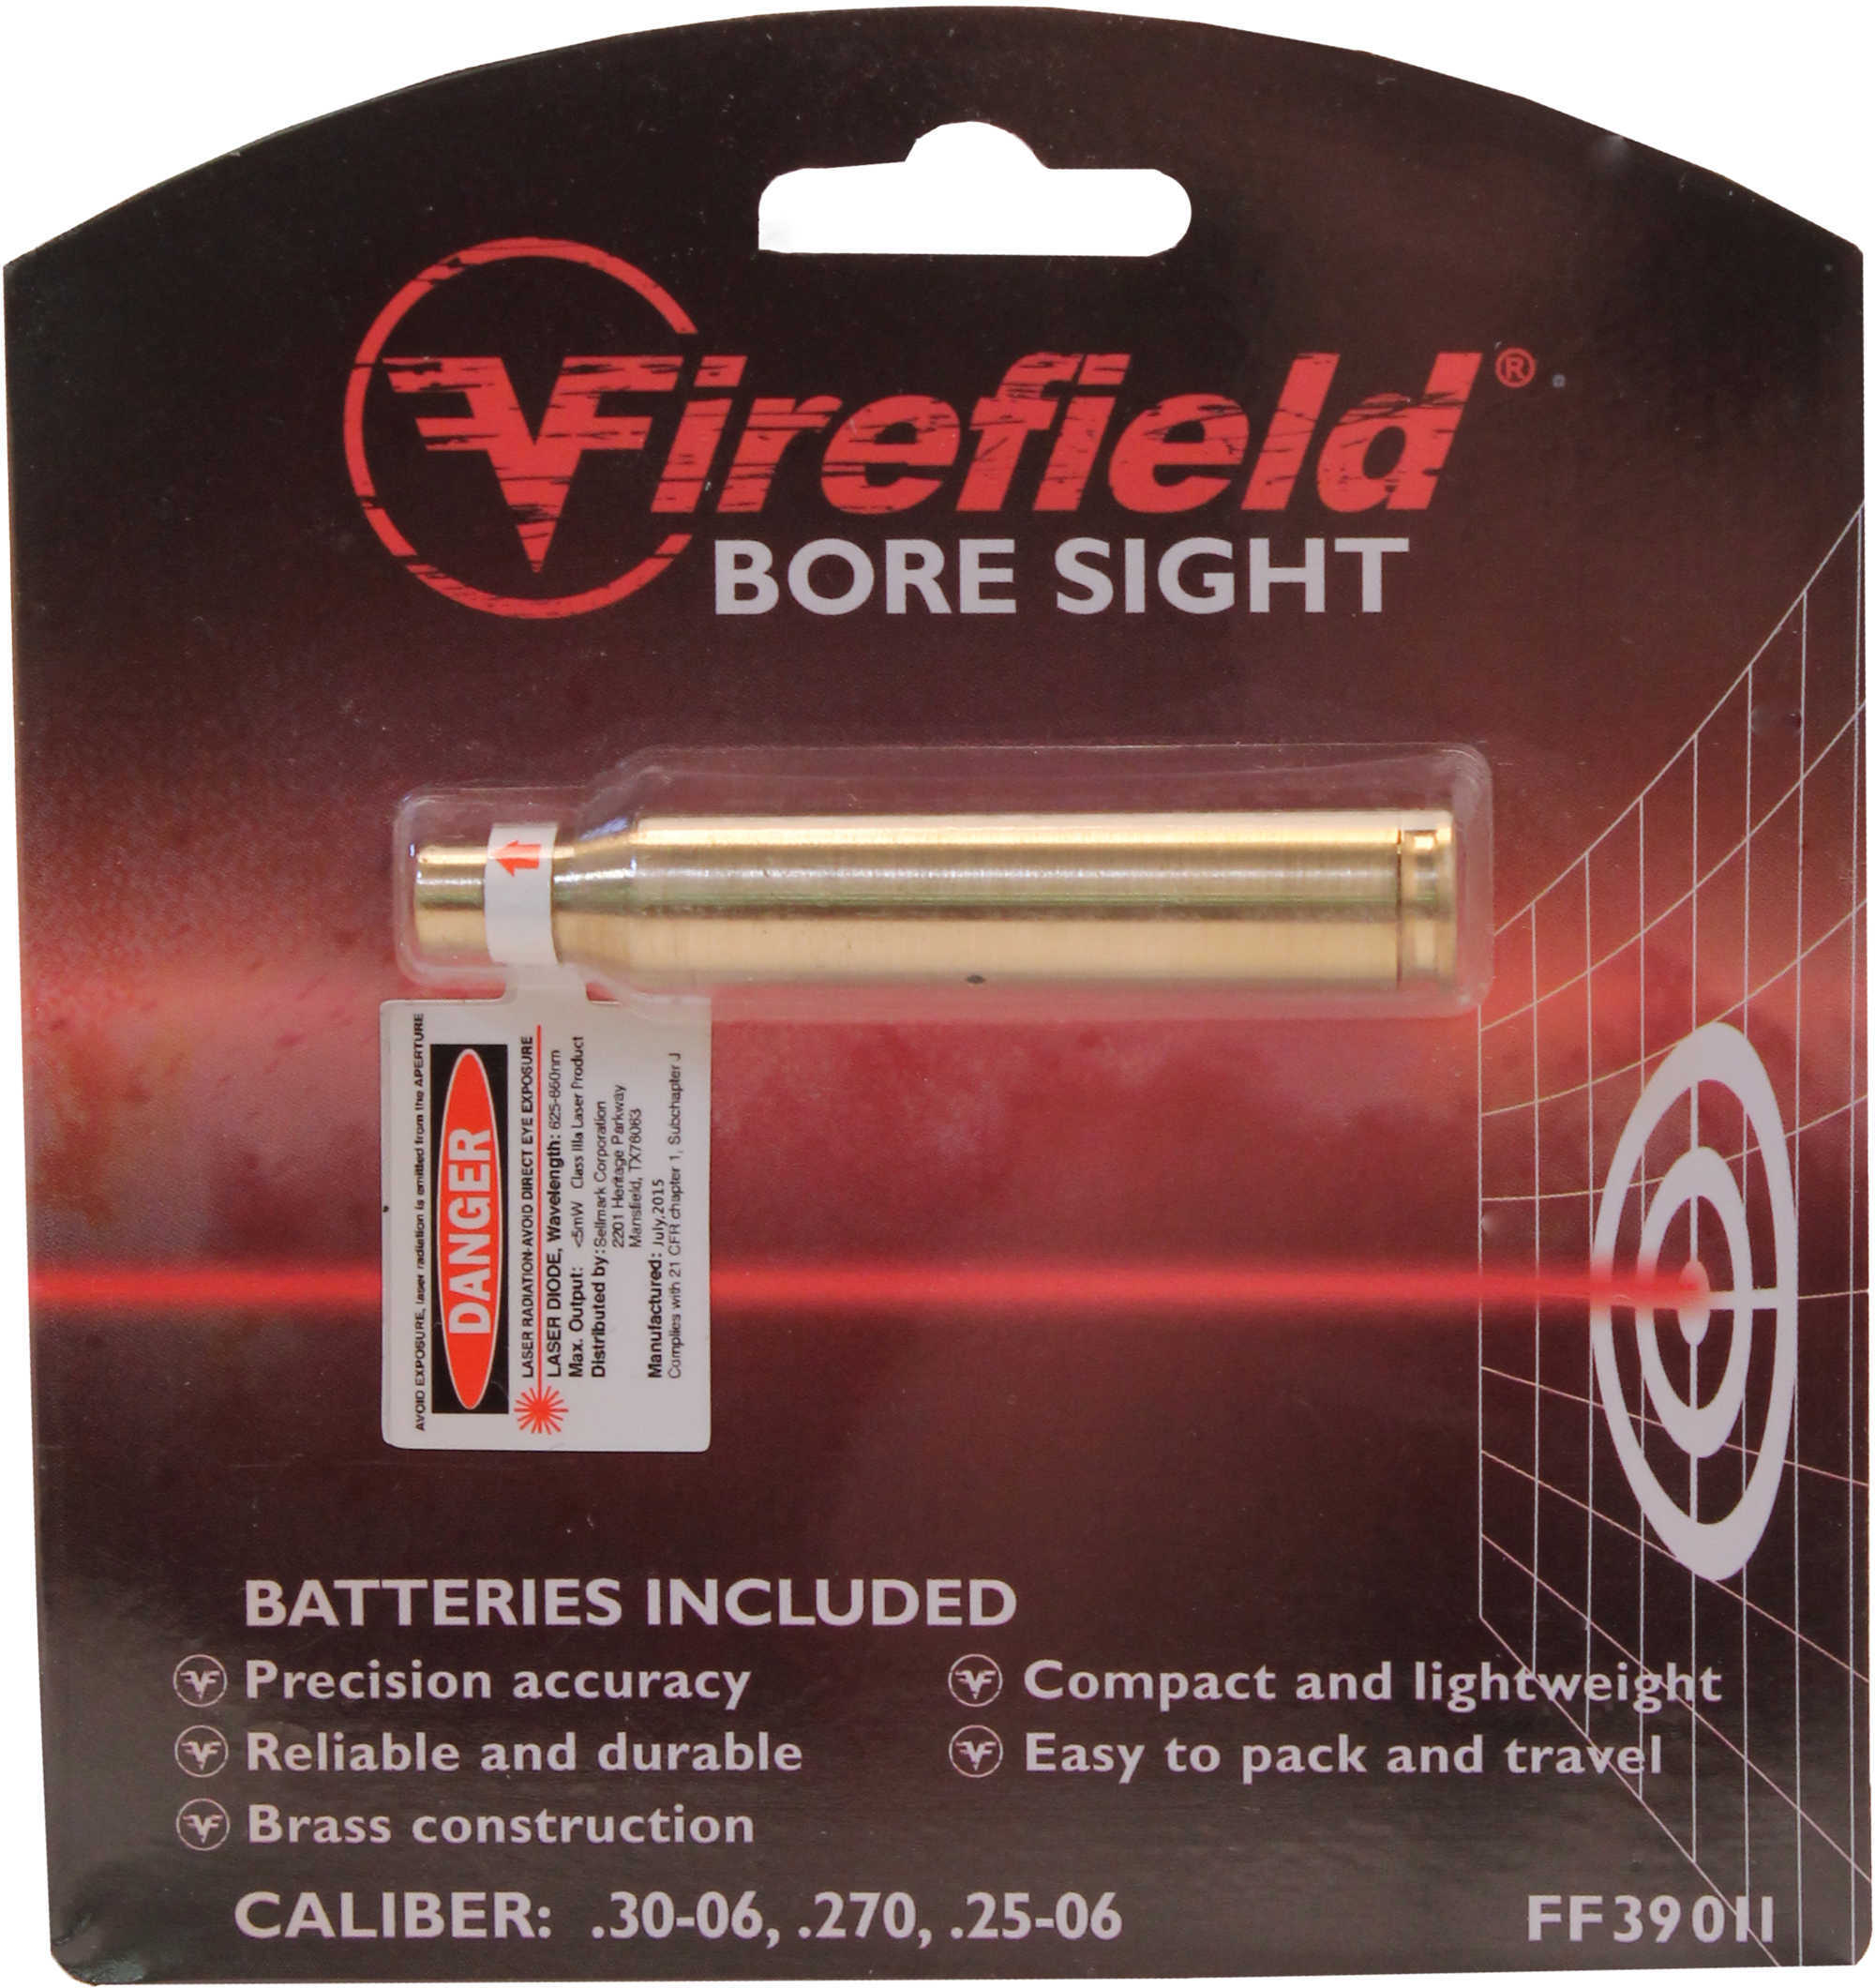 Firefield .30-06 In Chamber Red Laser Brass Md: FF39011